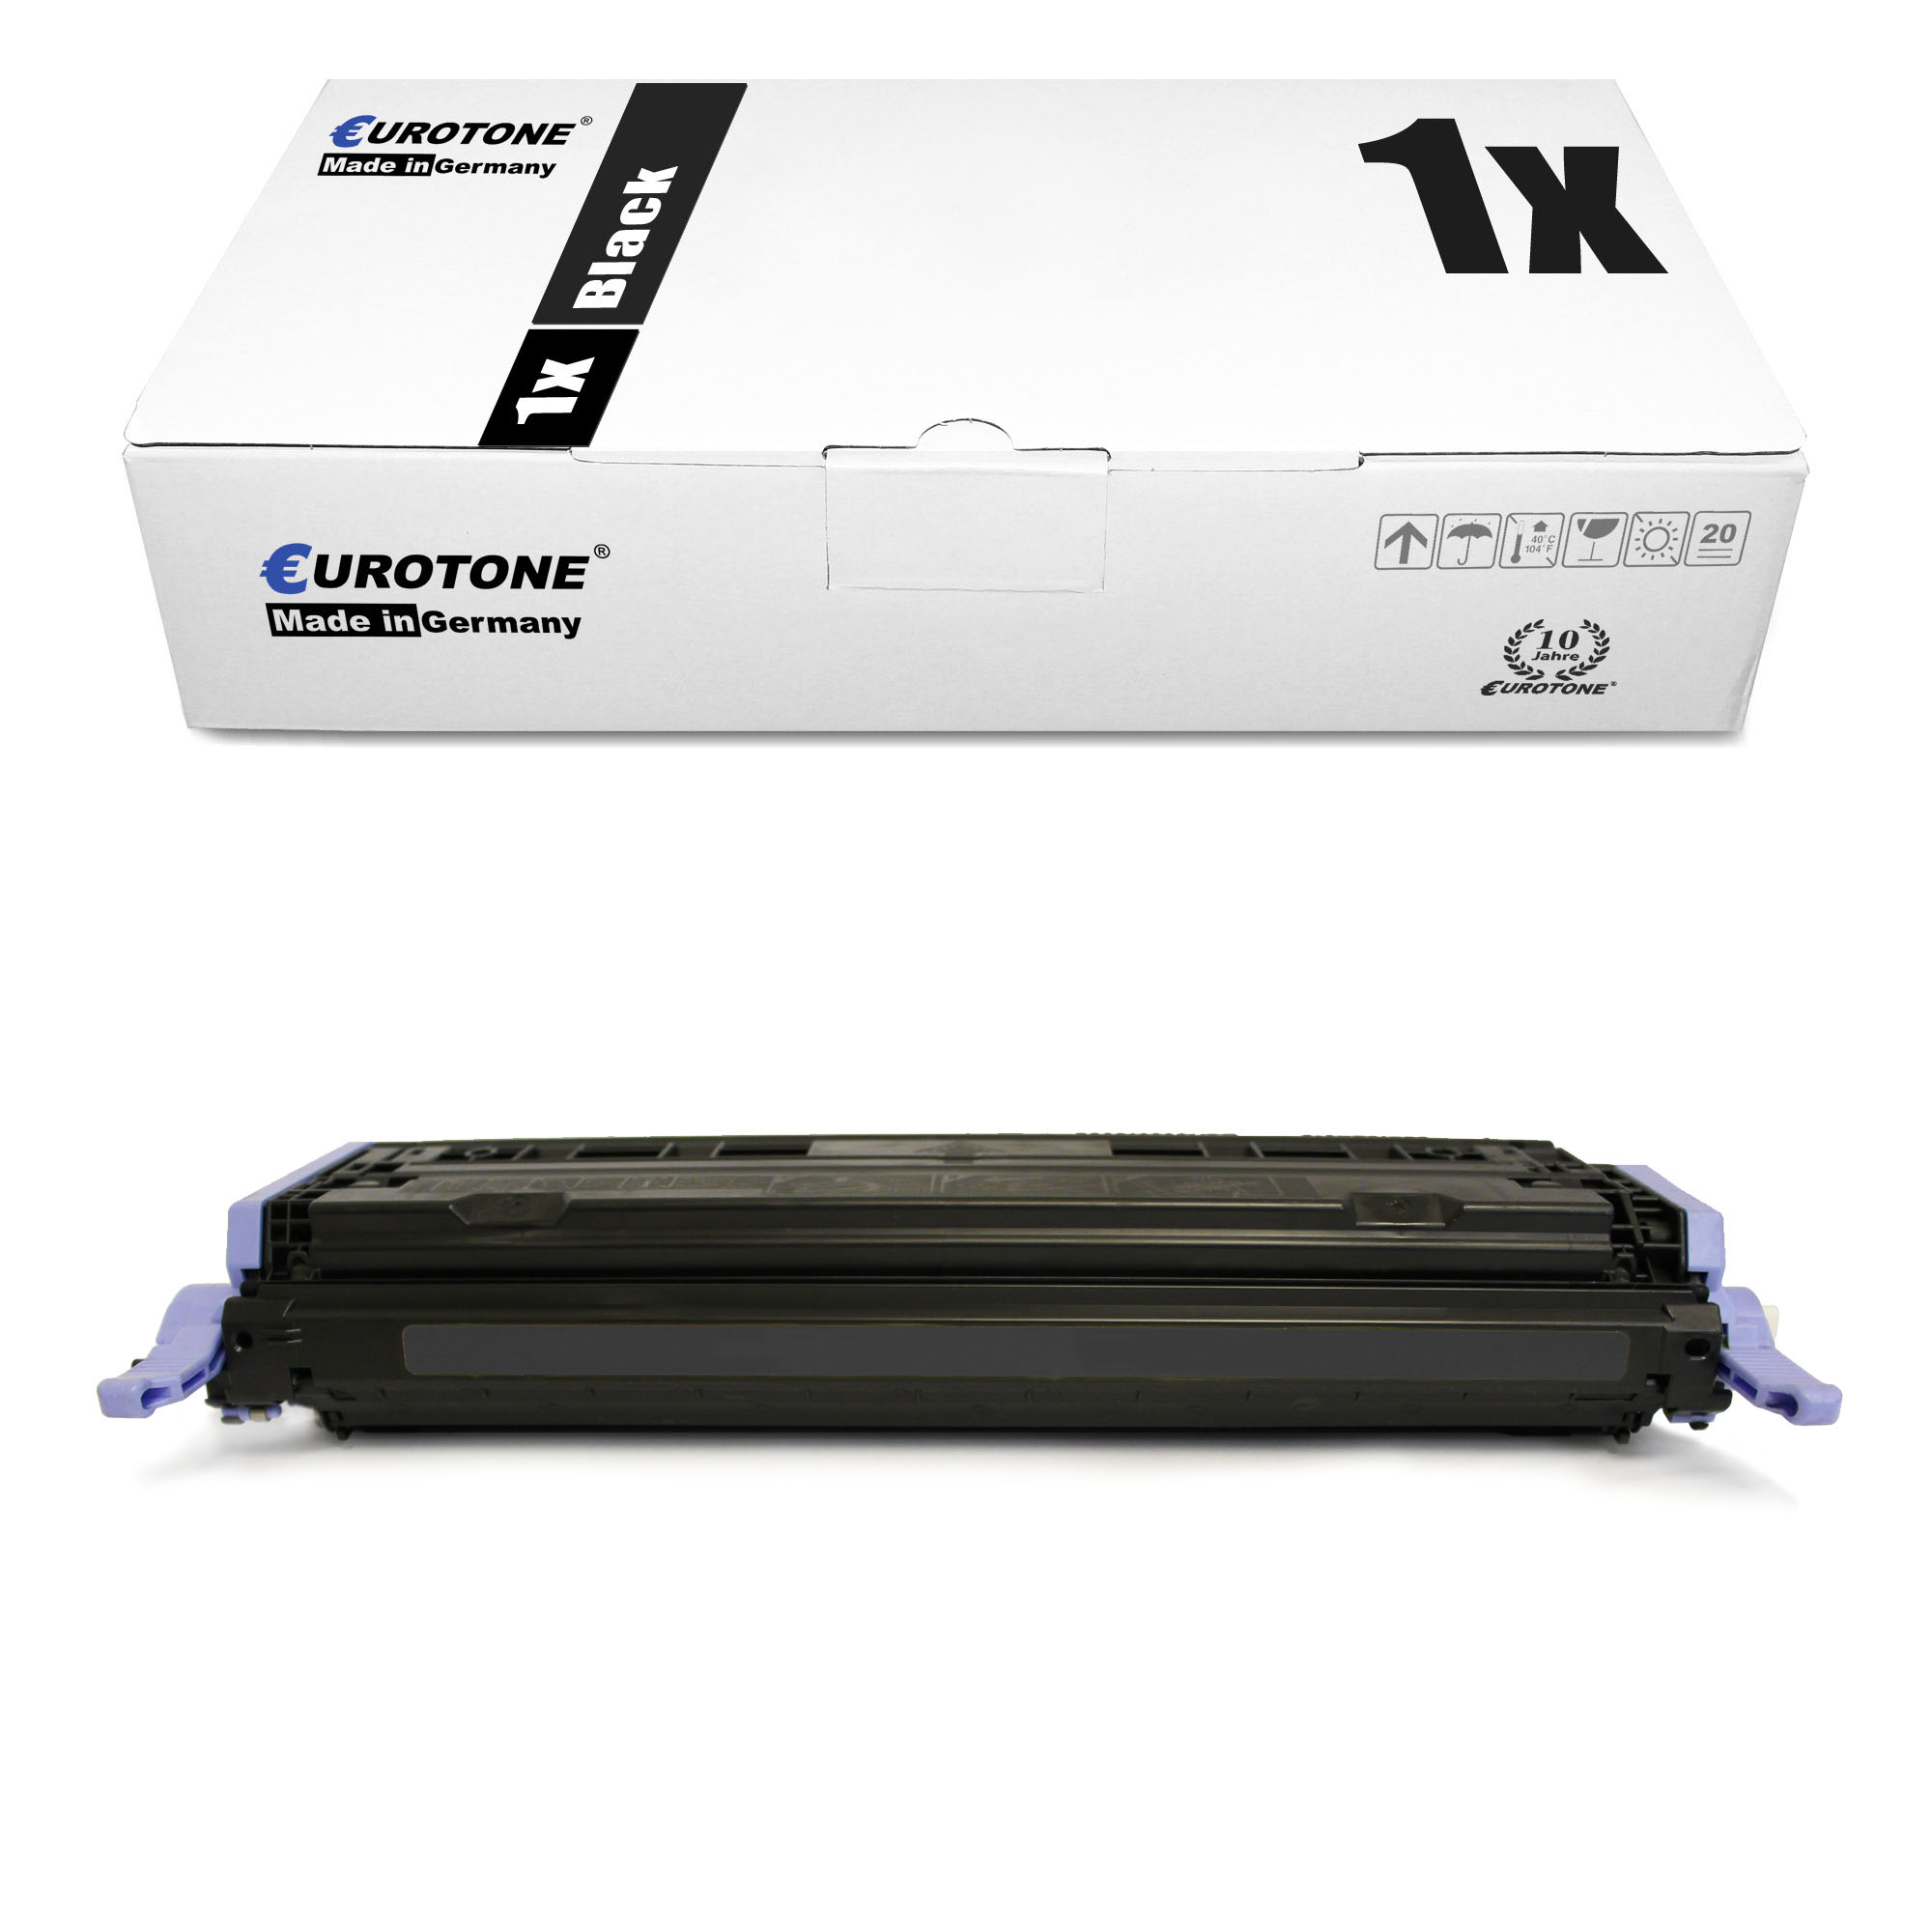 EUROTONE LaserJet 1600 1xBK Toner Cartridge (HP 124A) / Q6000A Schwarz